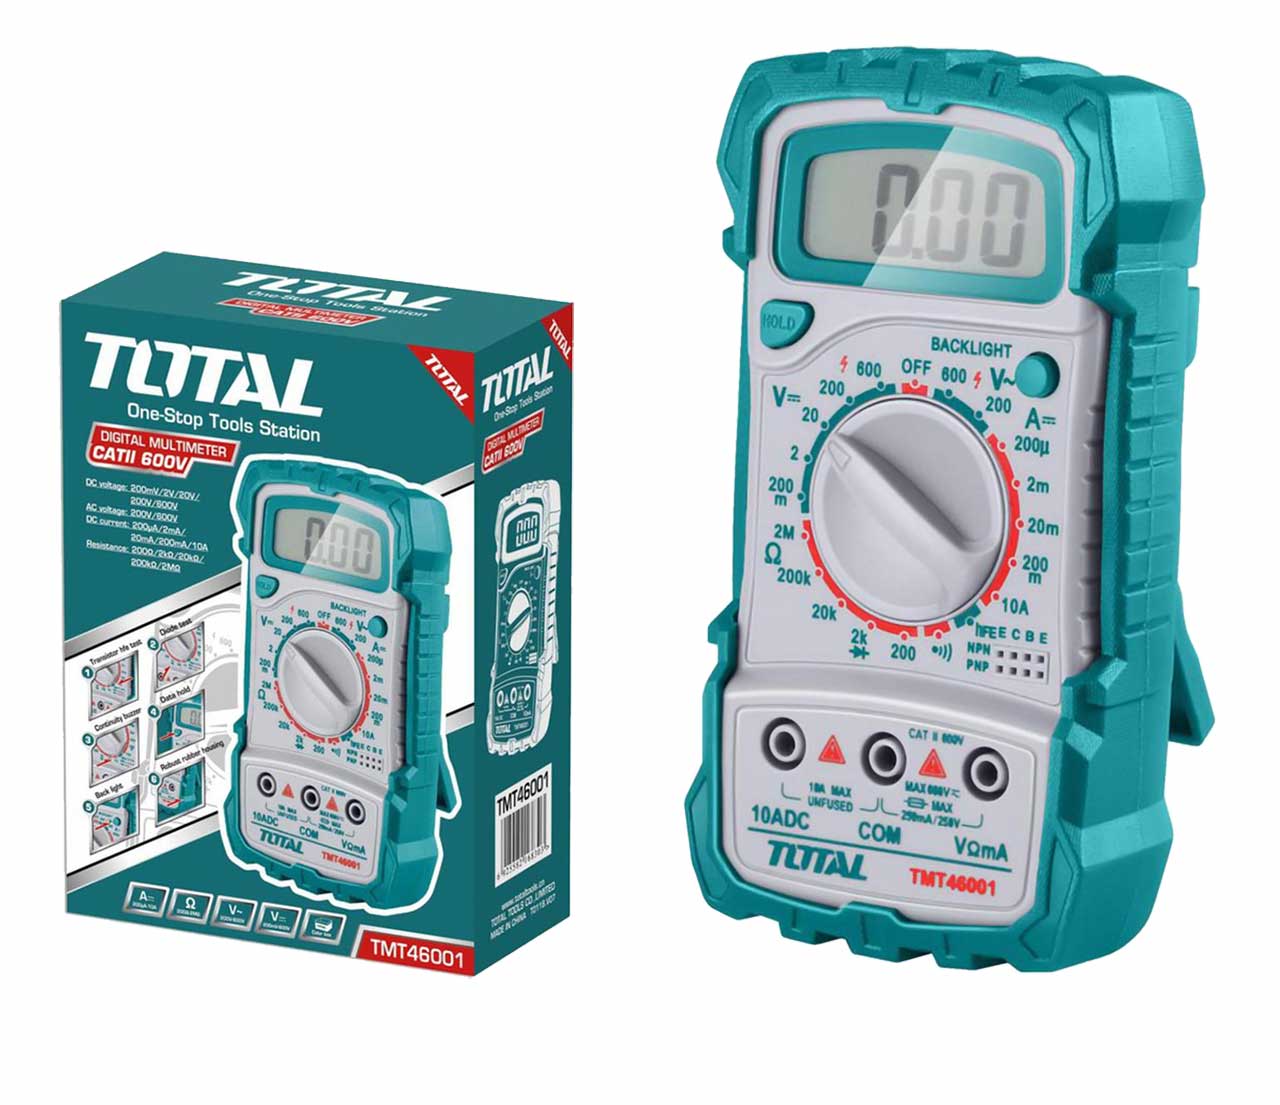 Total Digital Electric Multimeter 1999 Counts 600V - TMT46001 | Supply Master | Accra, Ghana Tools Buy Tools hardware Building materials